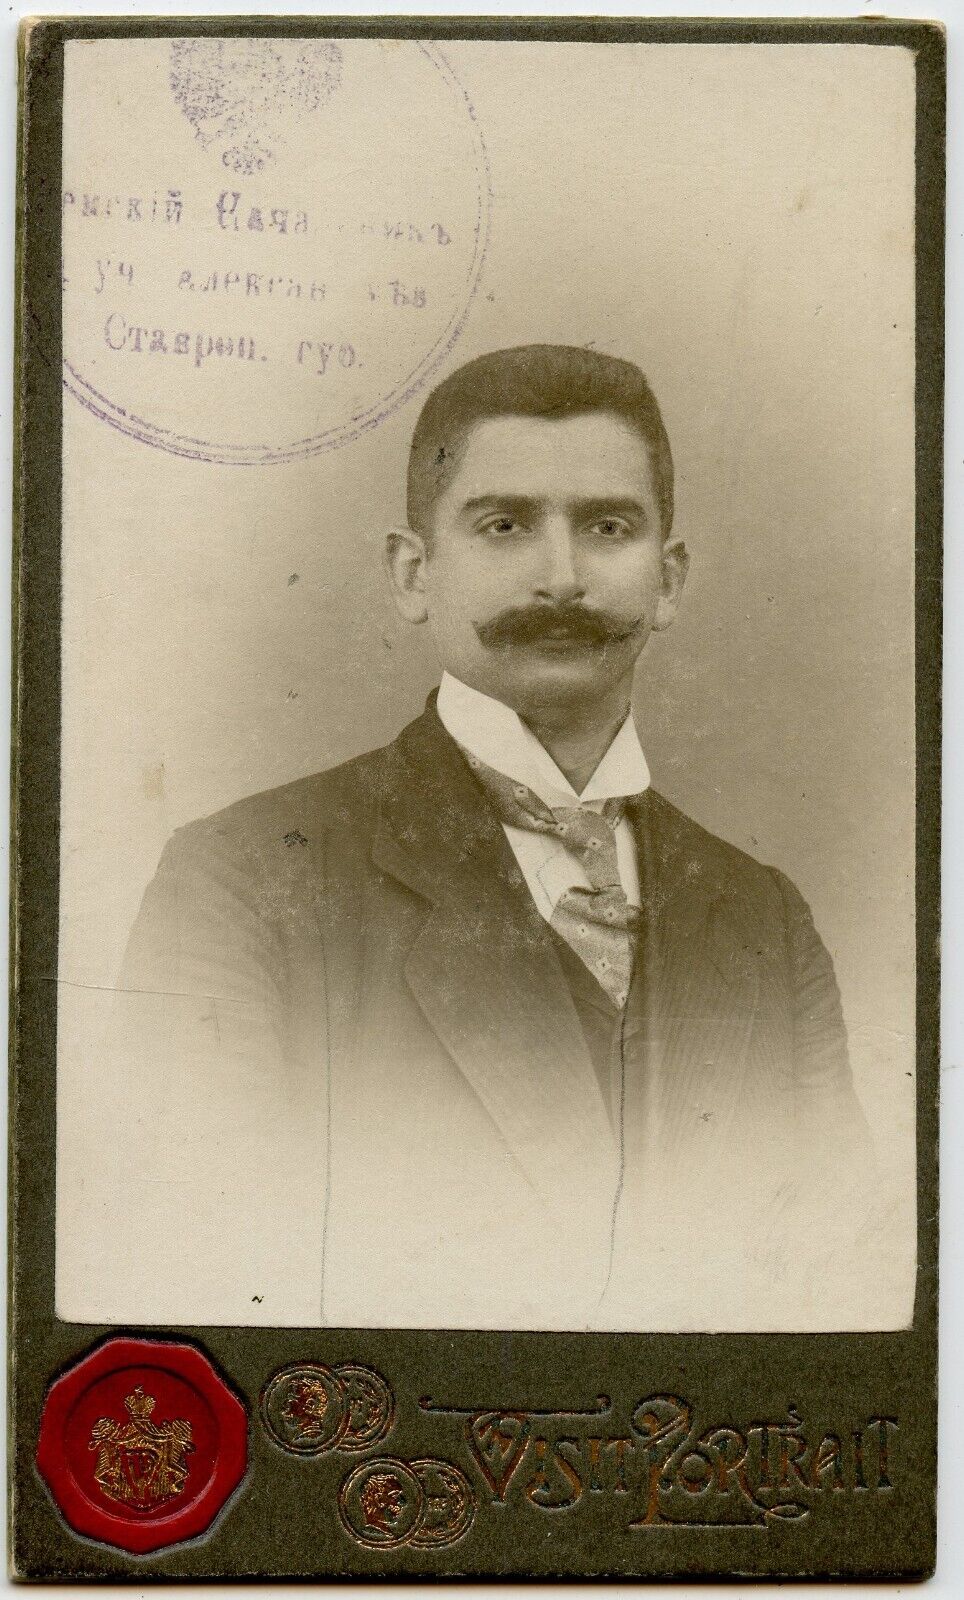 Jewish Pharmacist - Yankel Rabinovich Photo Id , Stavropol Gub. Russia 1914 CDV